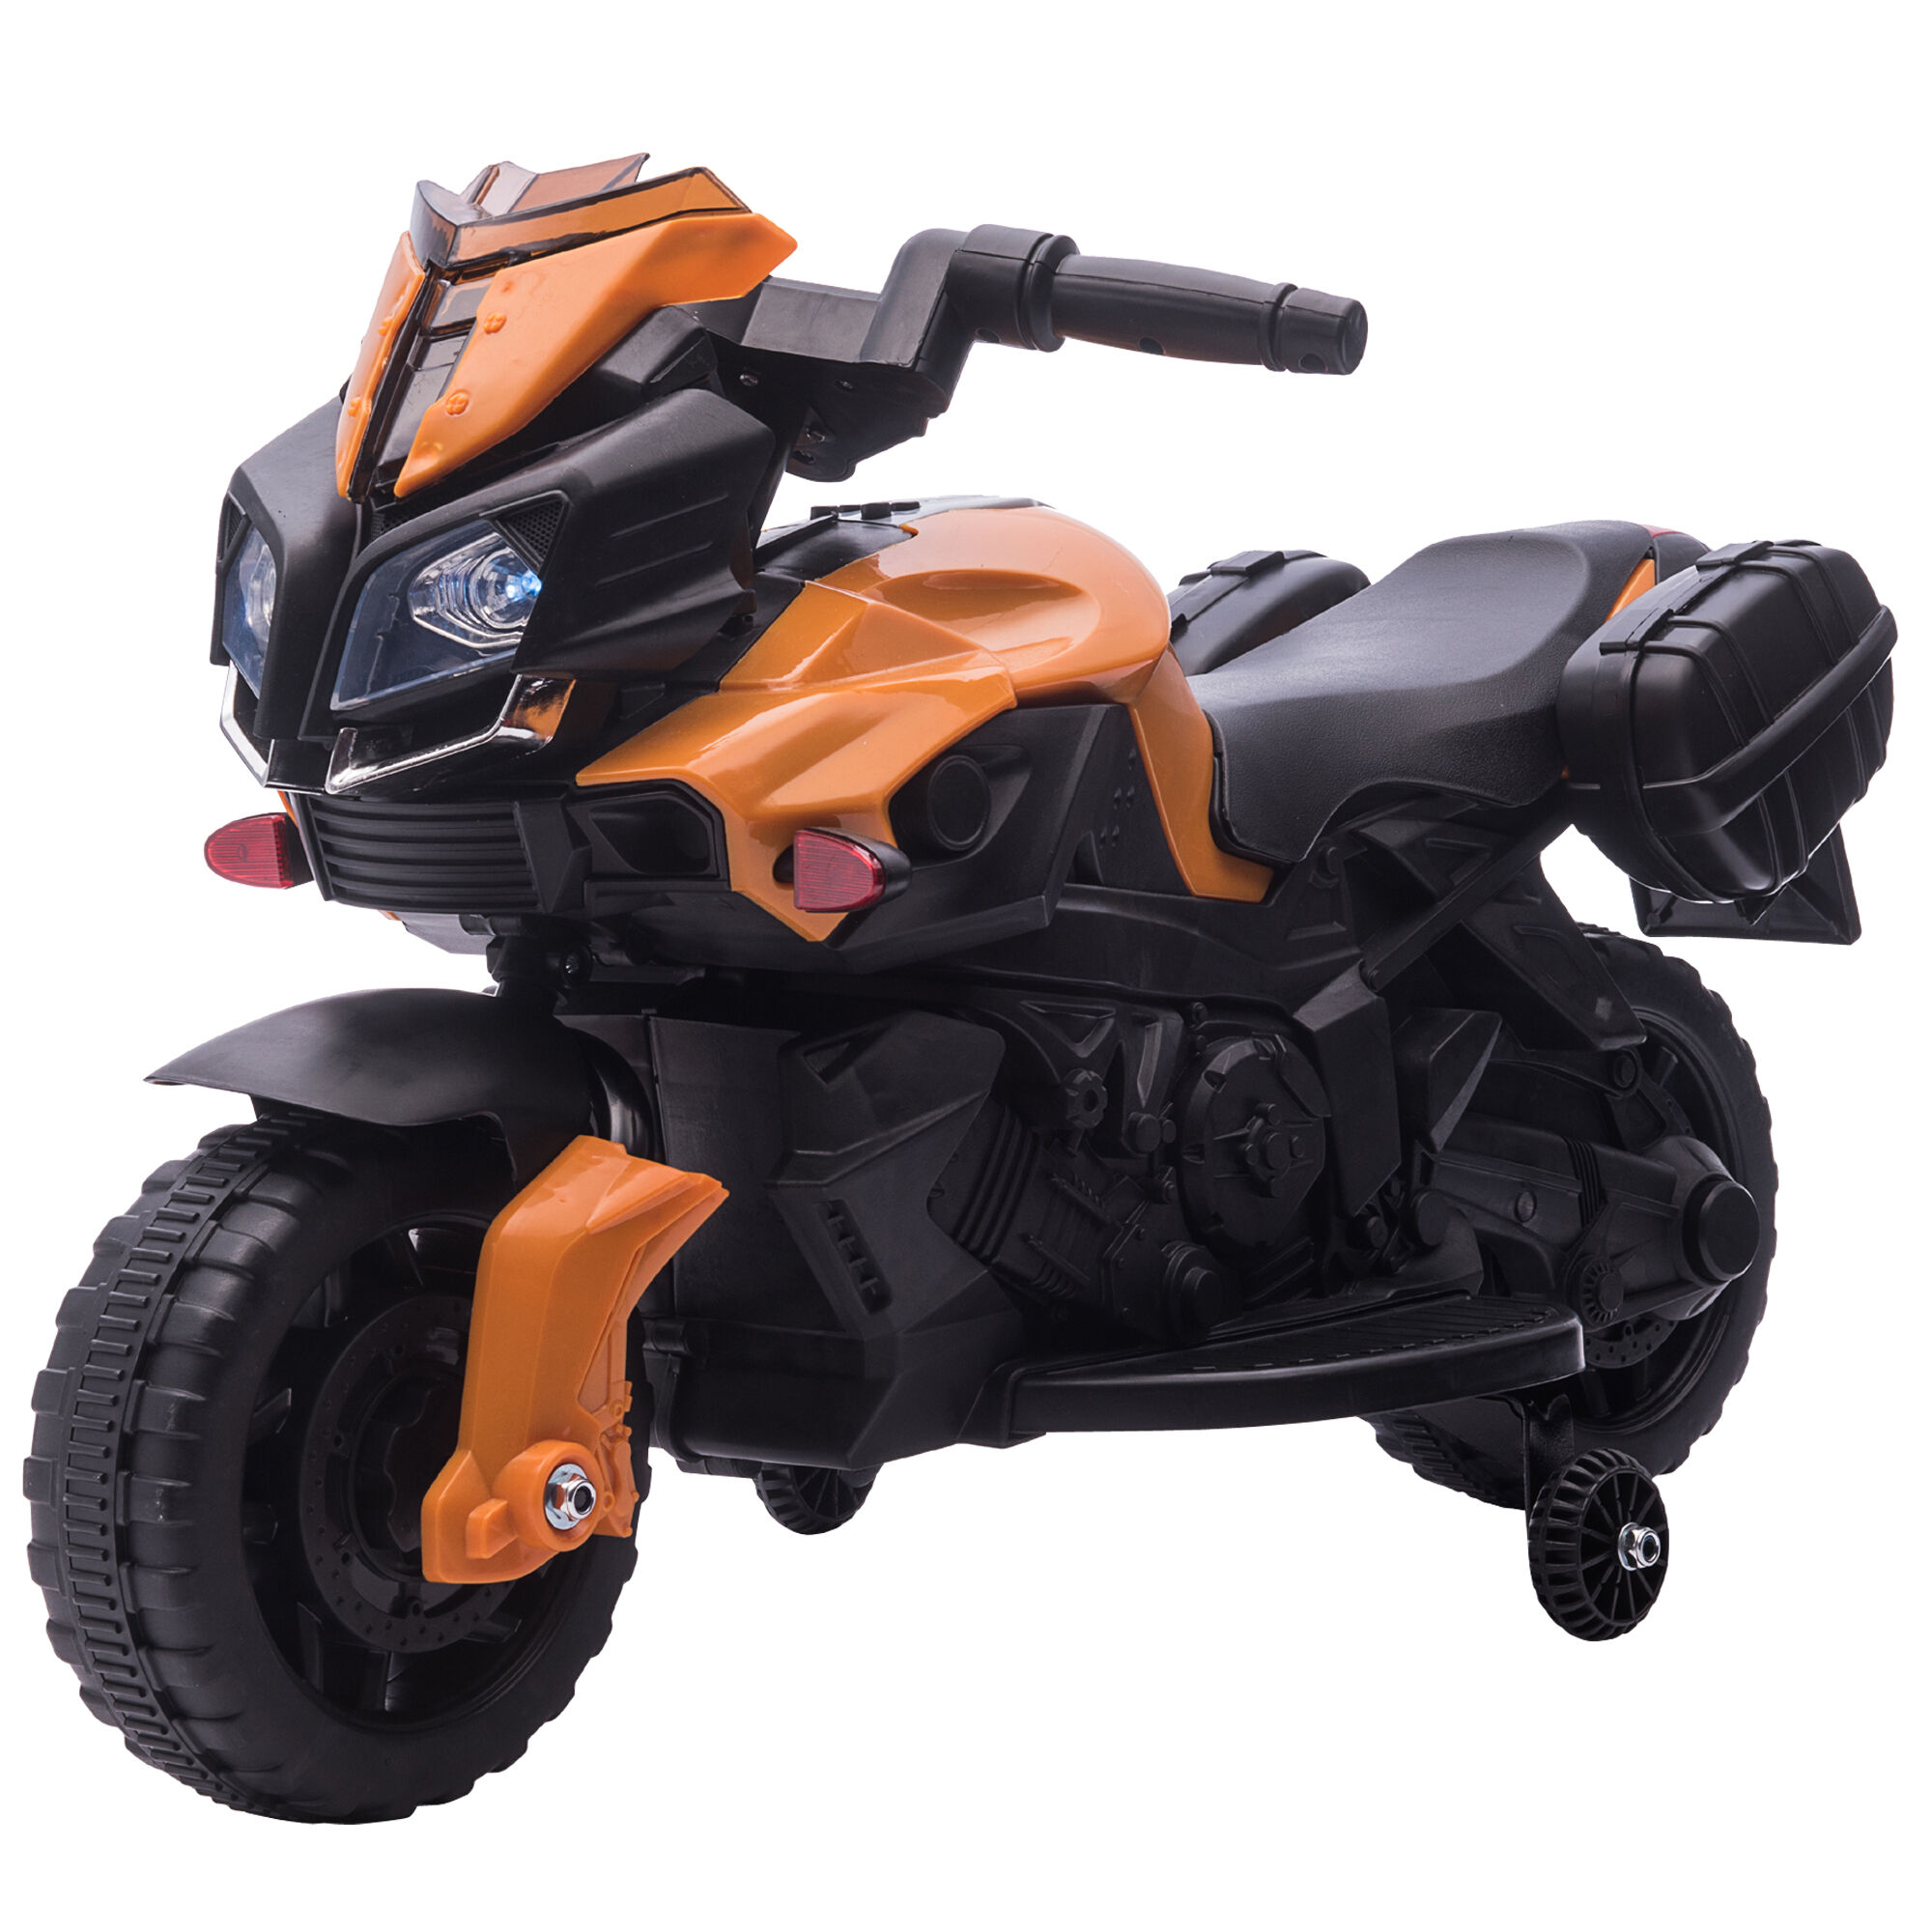 Aosom 6V Kids Electric Motorcycle Dirt Bike Ride-On Toy Off-Road Street Bike with Pedal Headlights Training Wheels Orange   Aosom.com